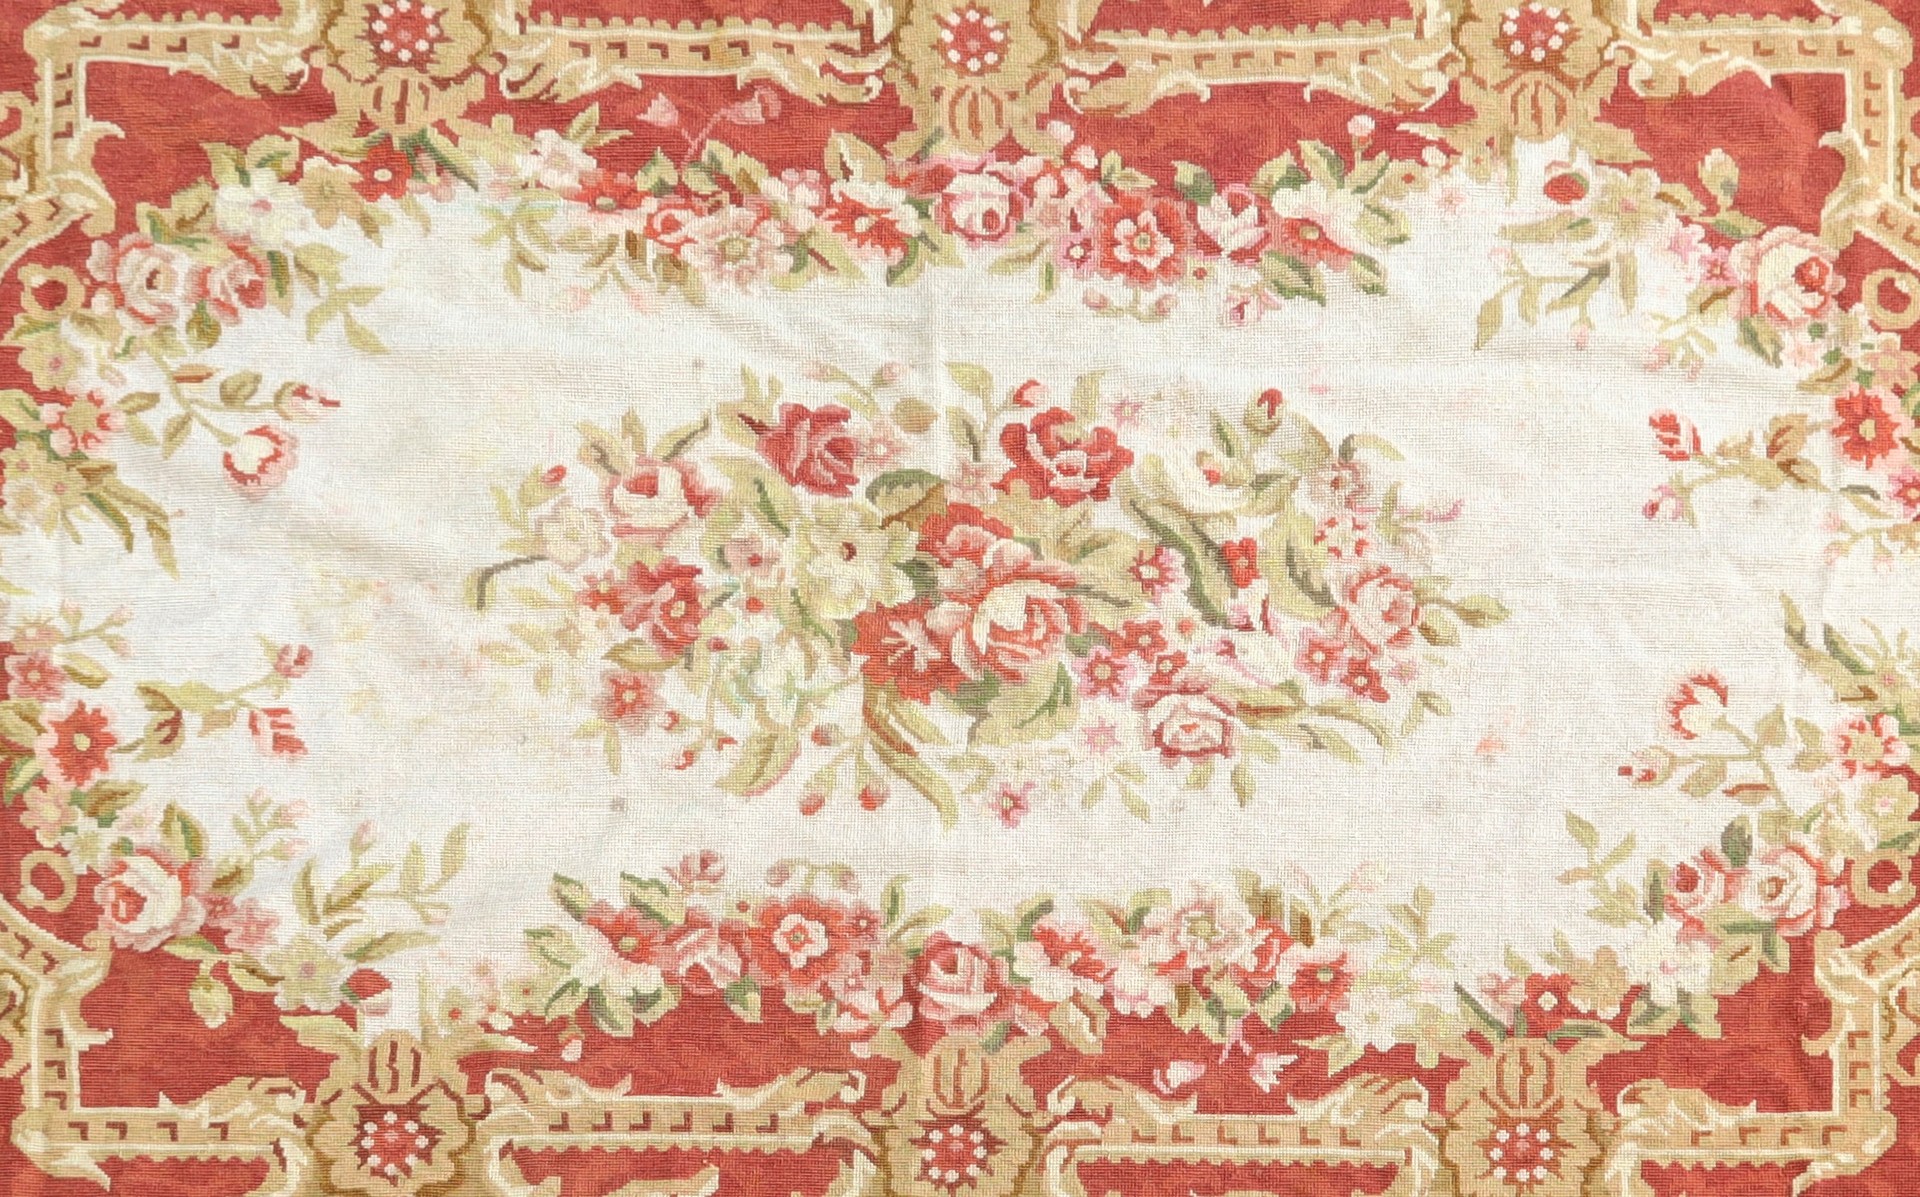 Aubusson carpet, France 20th century - Image 2 of 4